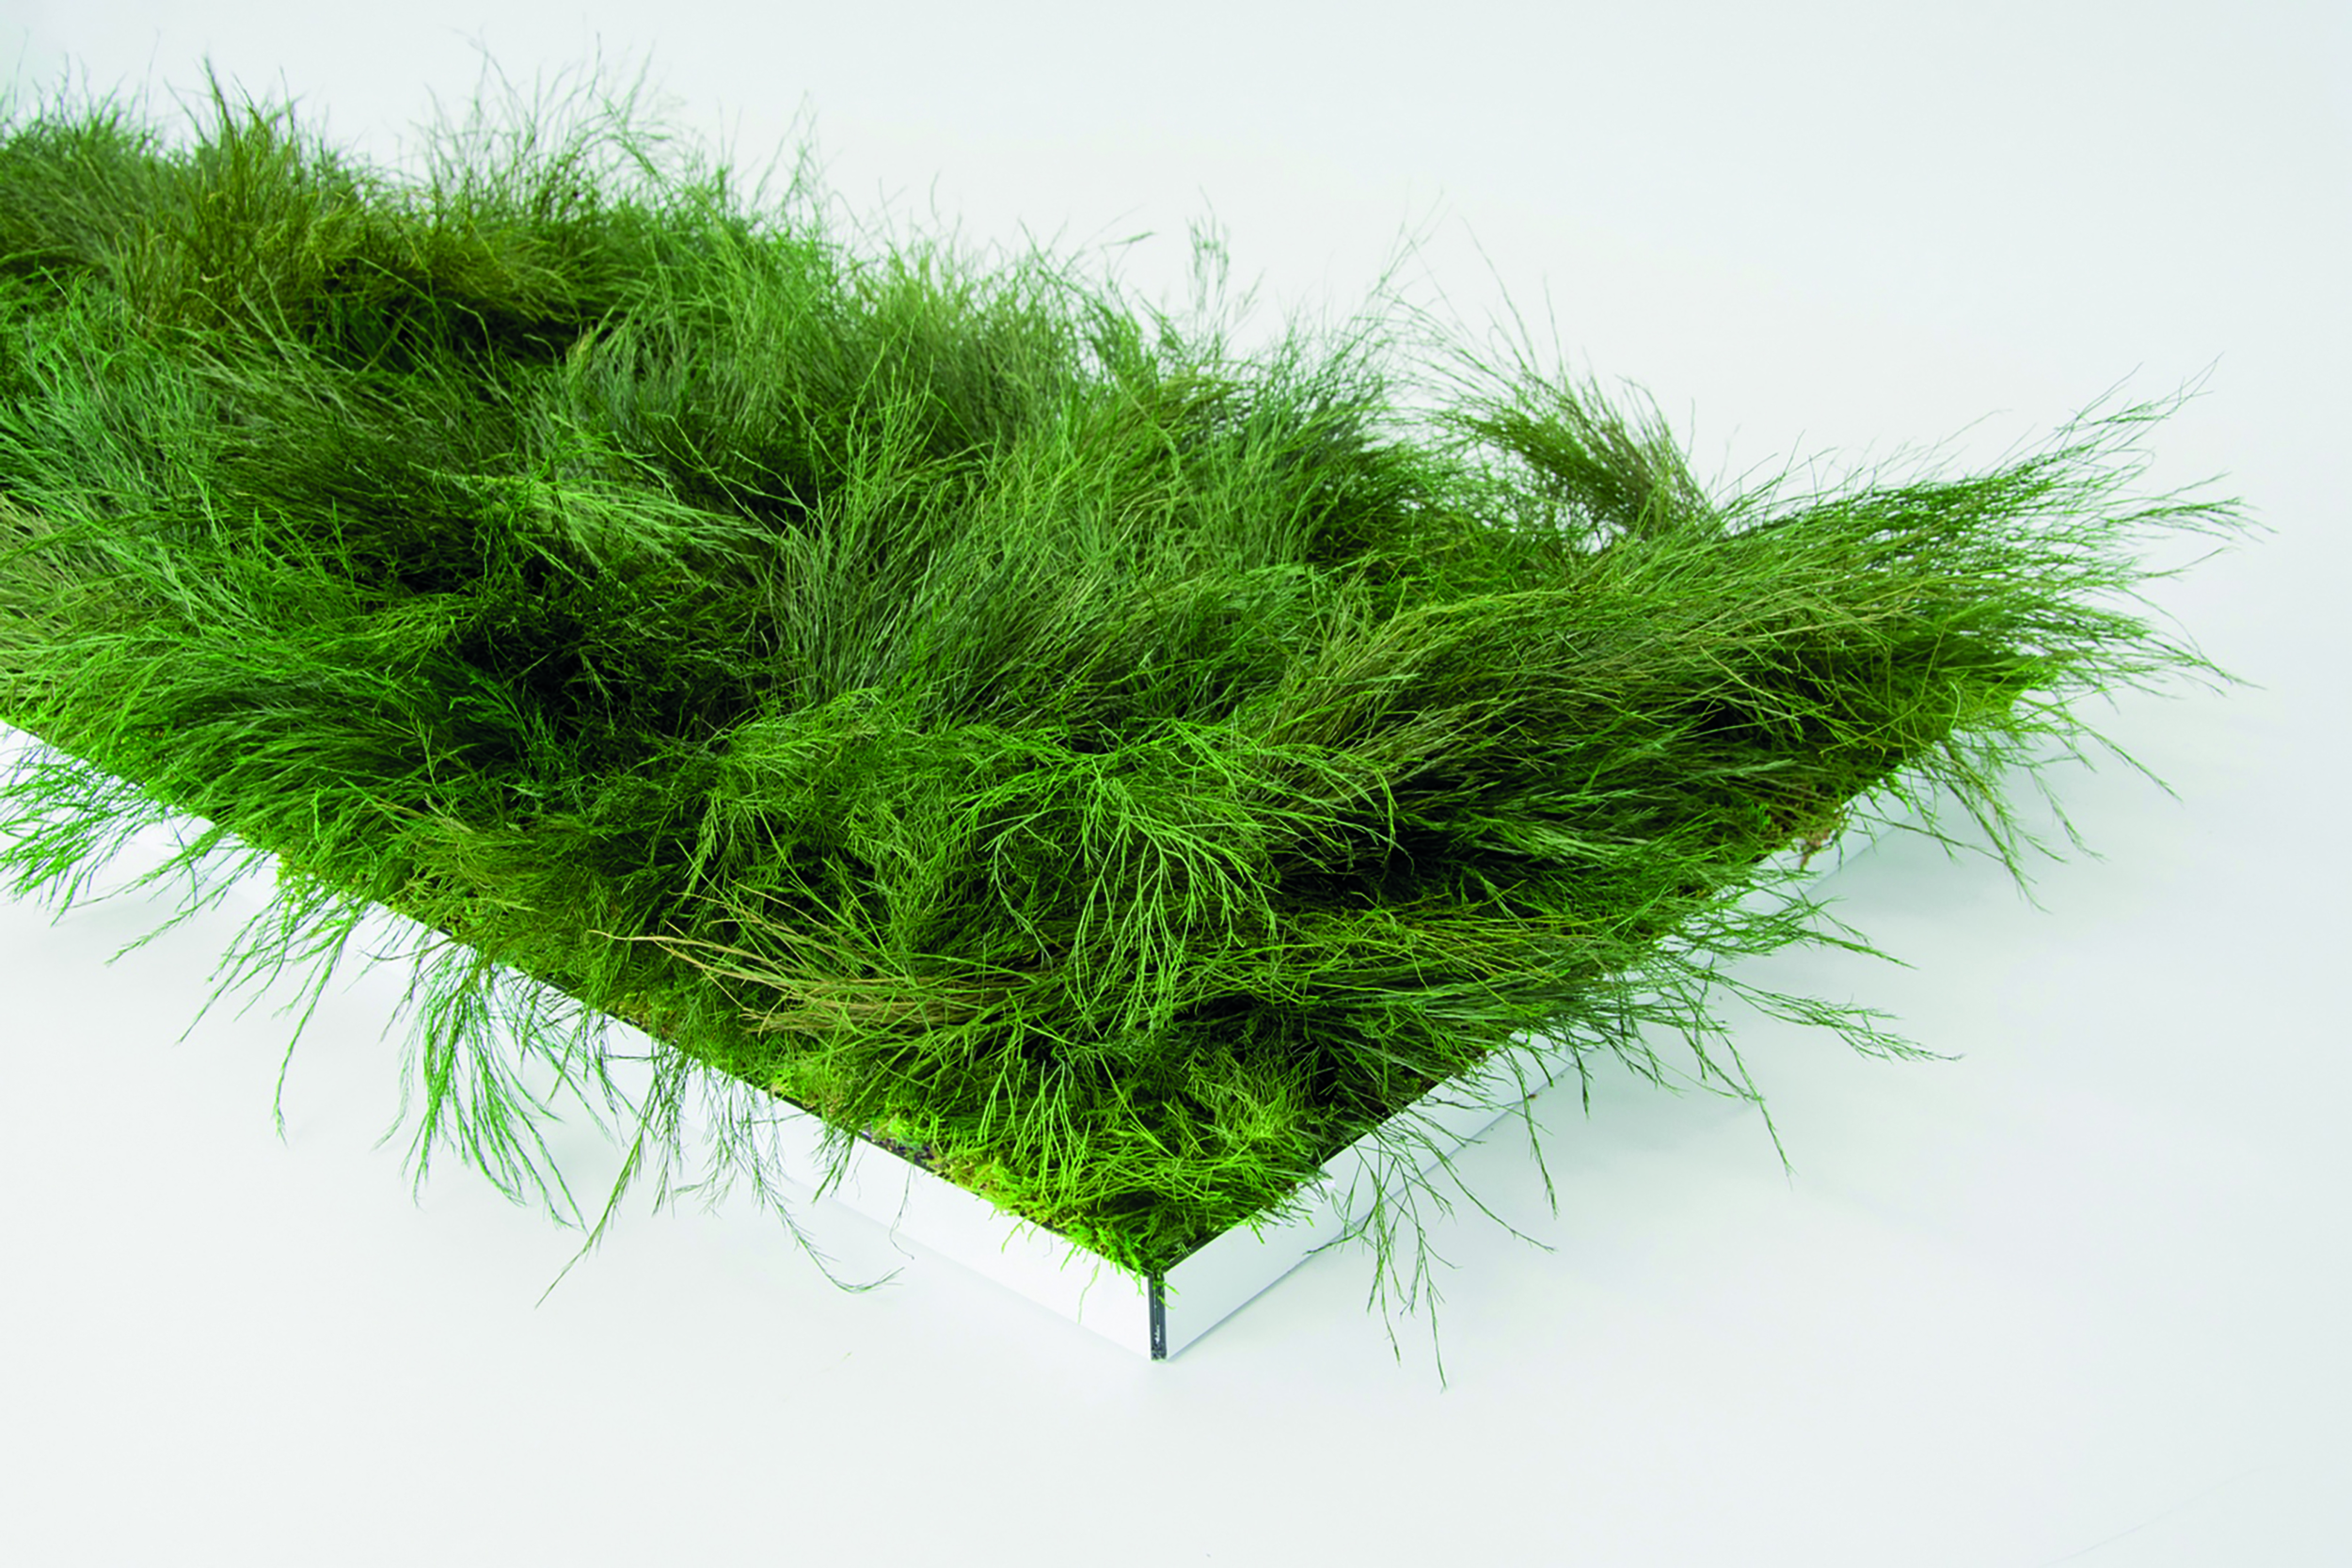 Tiki-grass